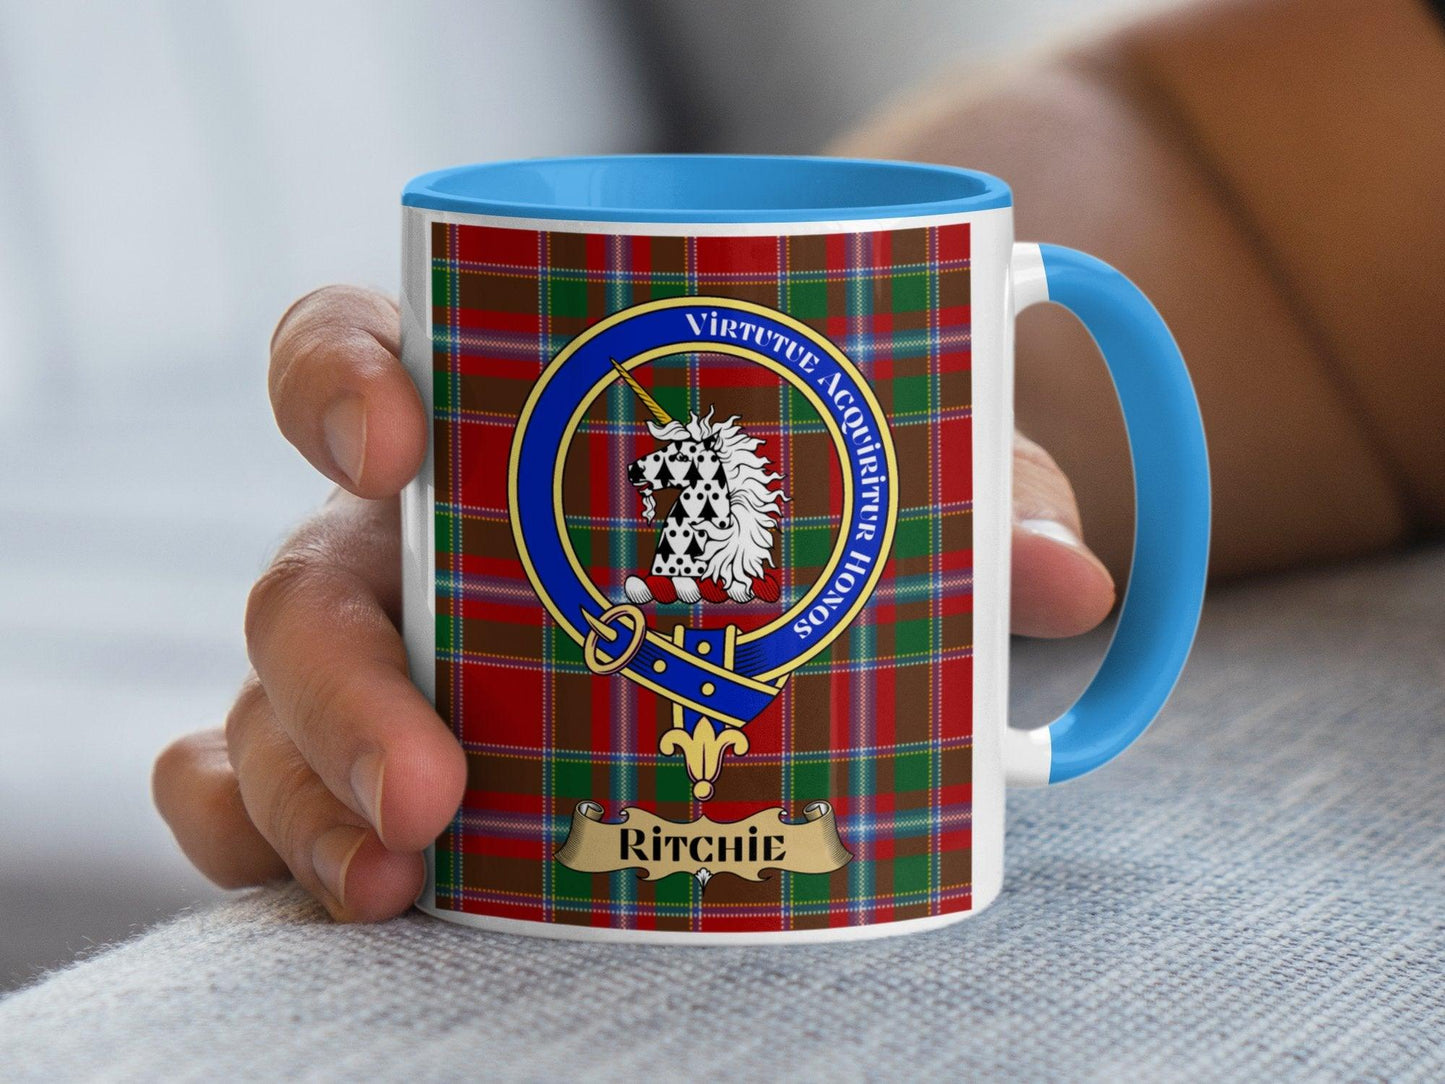 Ritchie Clan Crest on Traditional Scottish Tartan Mug - Living Stone Gifts